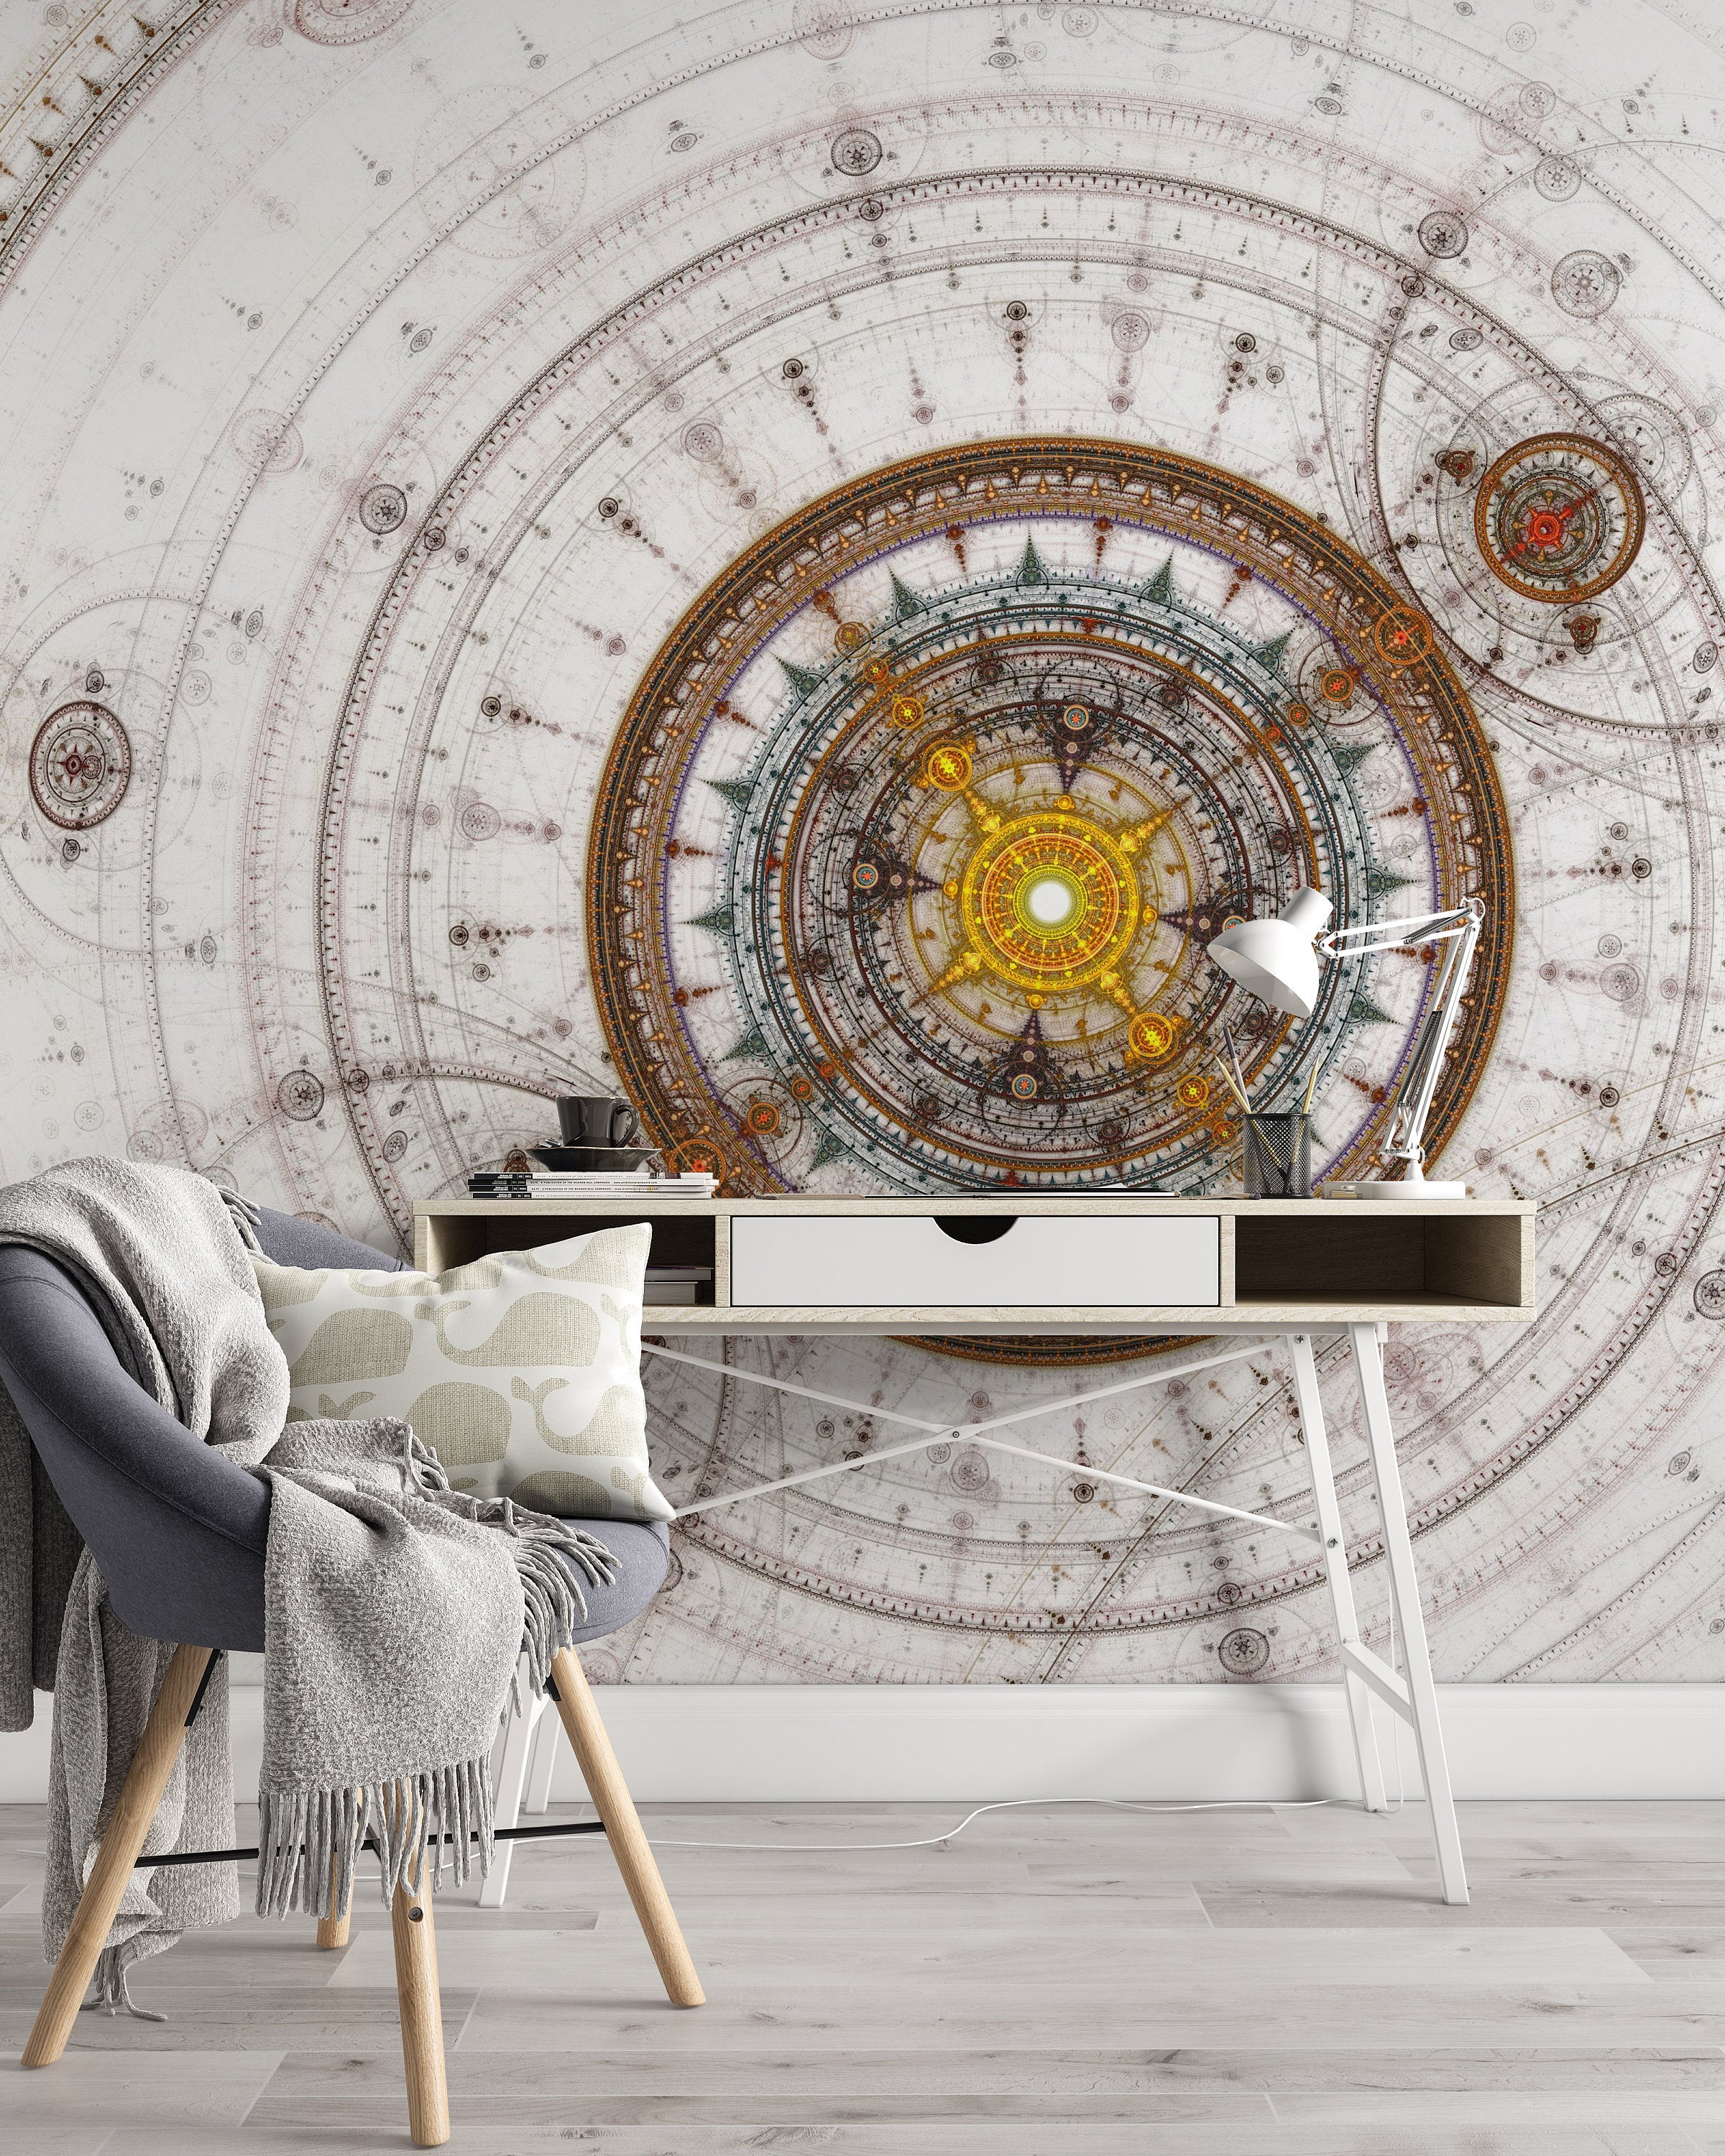 Abstract Digital Fractal Circles Compass Art White background Wallpaper Cafe Restaurant Decoration Living Room Bedroom Mural Home Decor